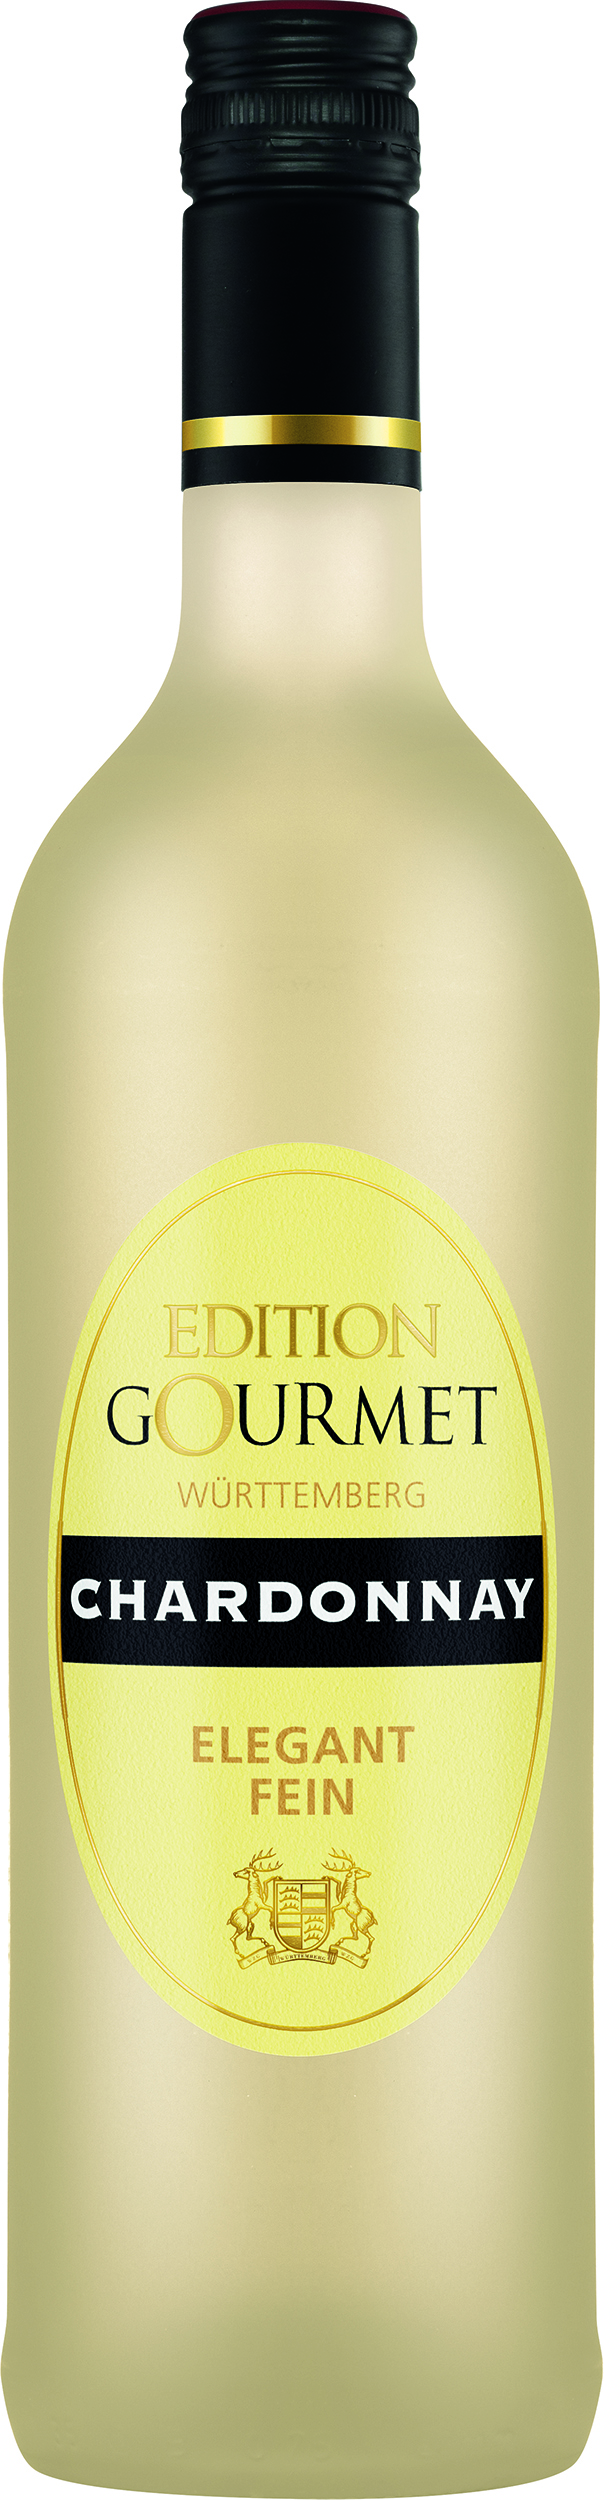 WZG Edition Gourmet Chardonnay trocken 0,75 L Elegant Fein - Weisswein, Württemberger Wein